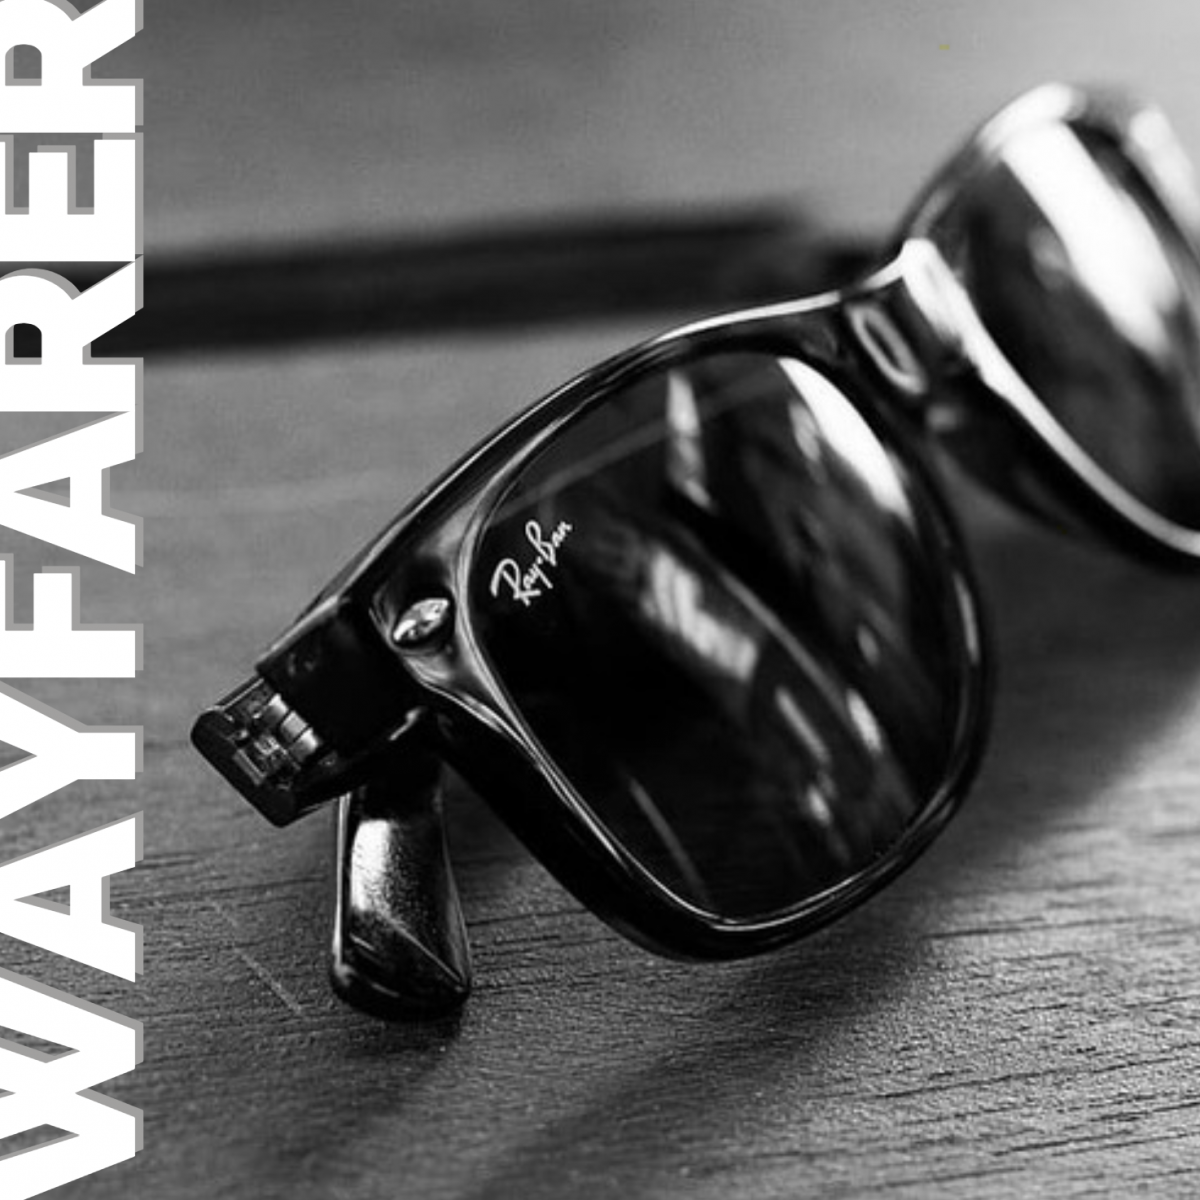 wayfarer sunglasses meaning